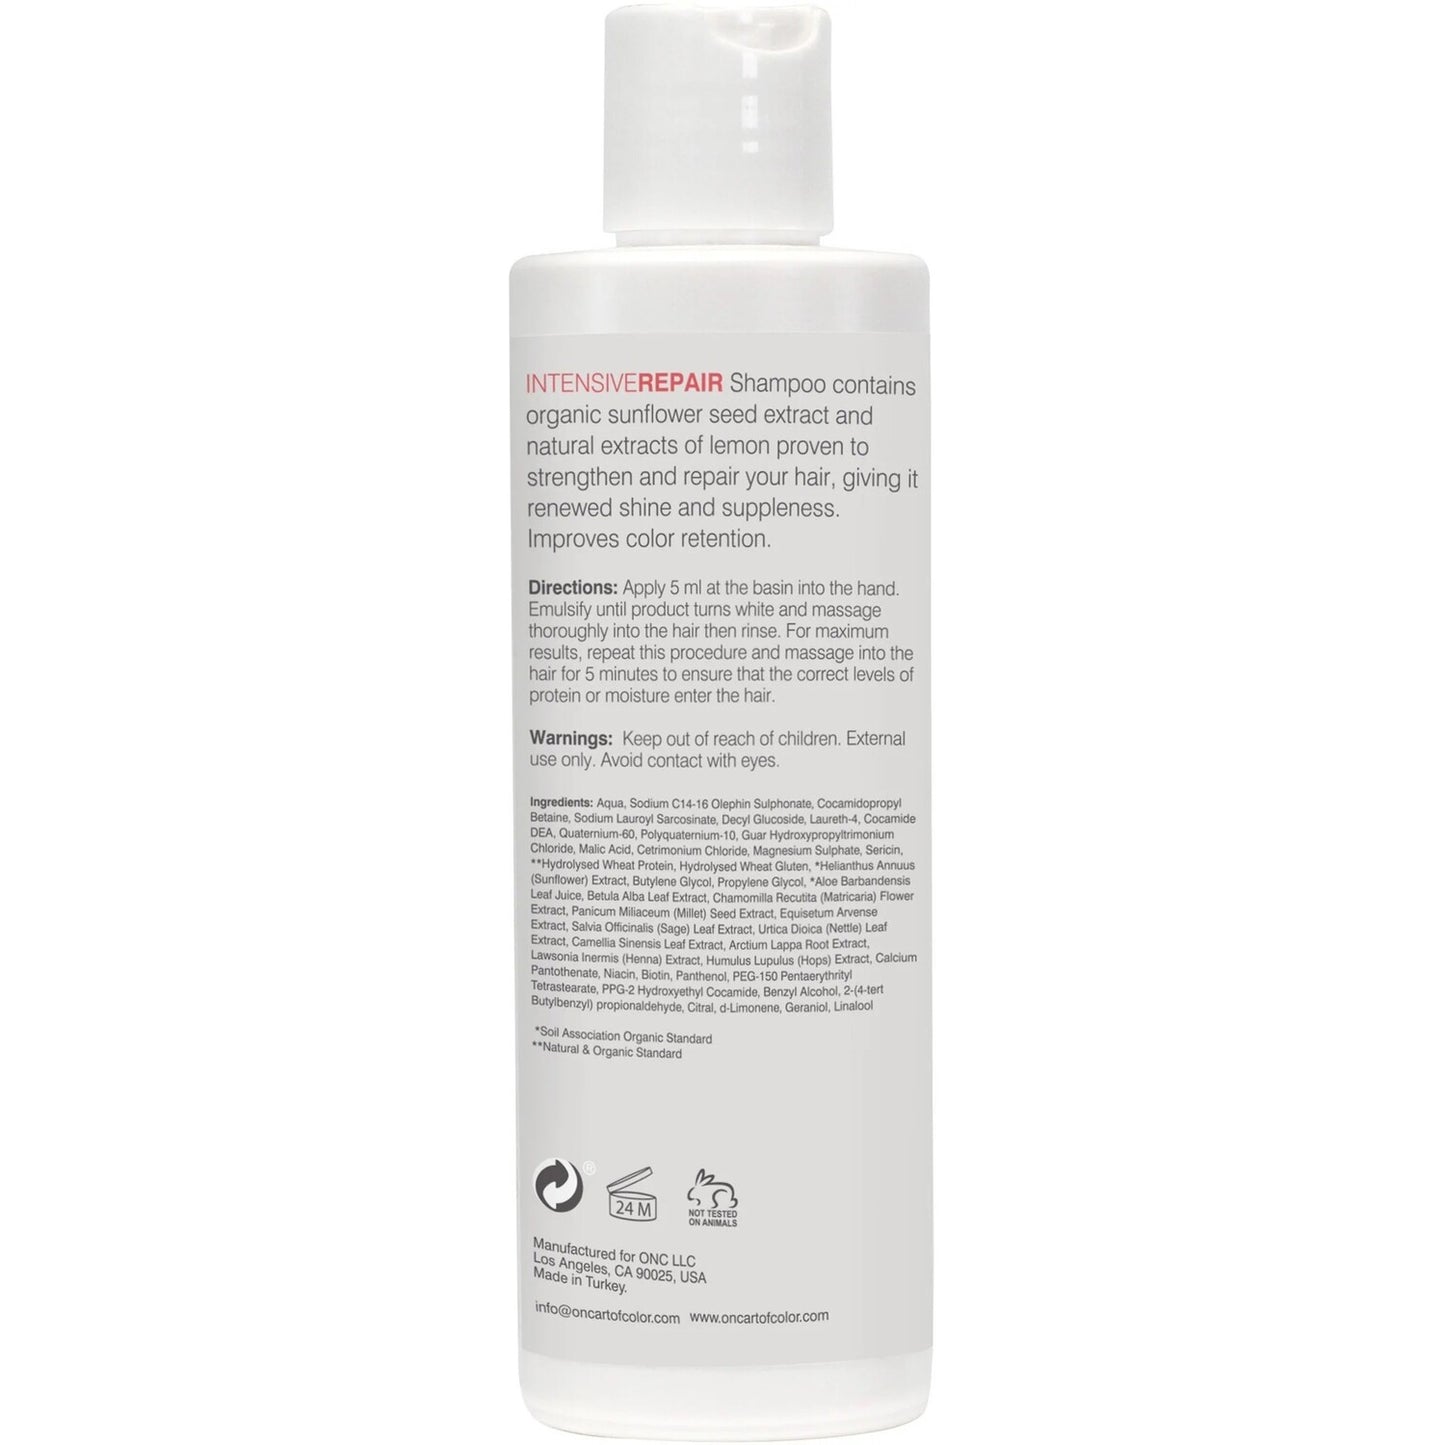 Artofcare INTENSIVE REPAIR Shampoo/Conditioner